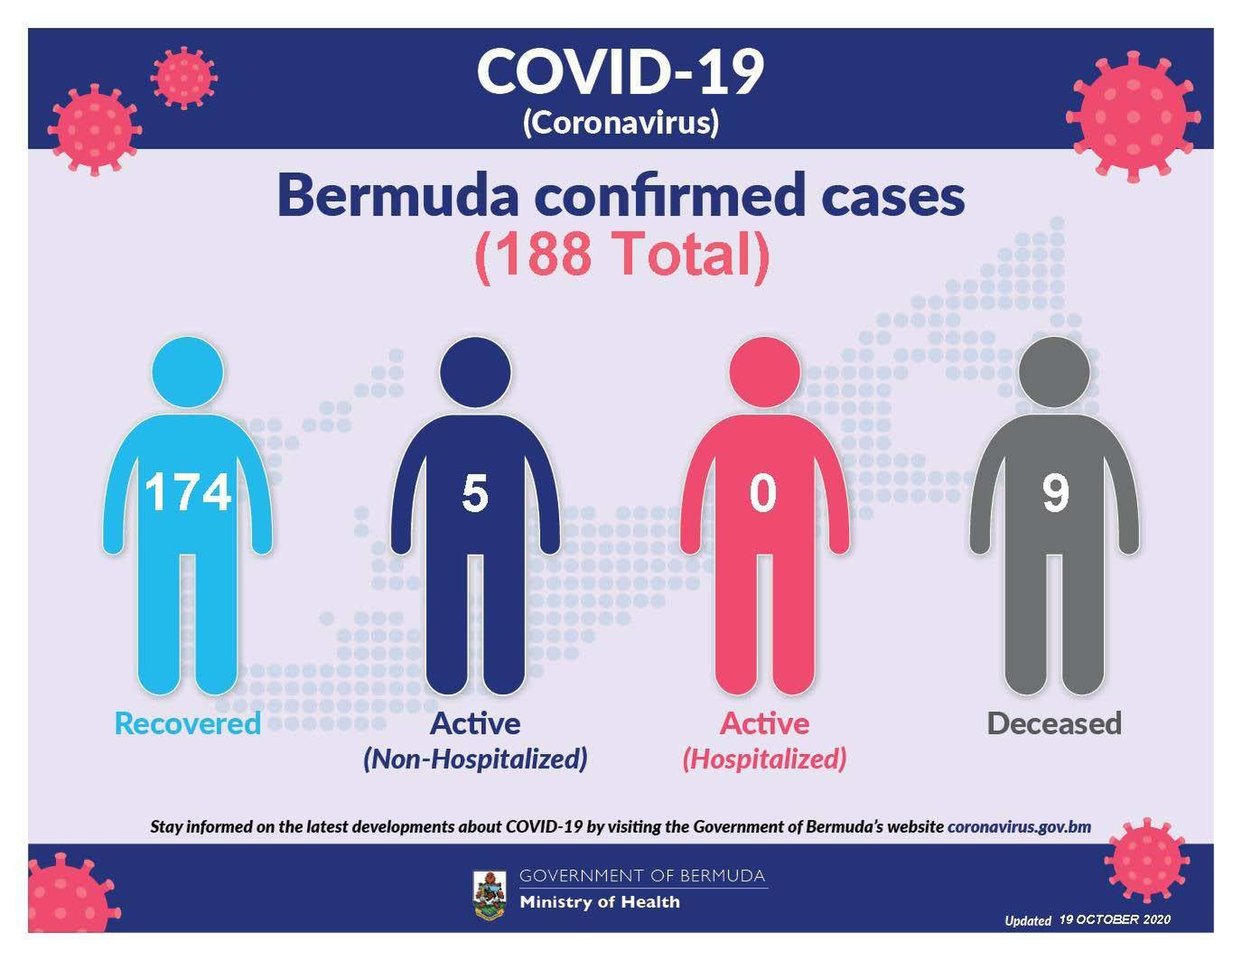 No new COVID-19 cases reported in Bermuda, 21 October